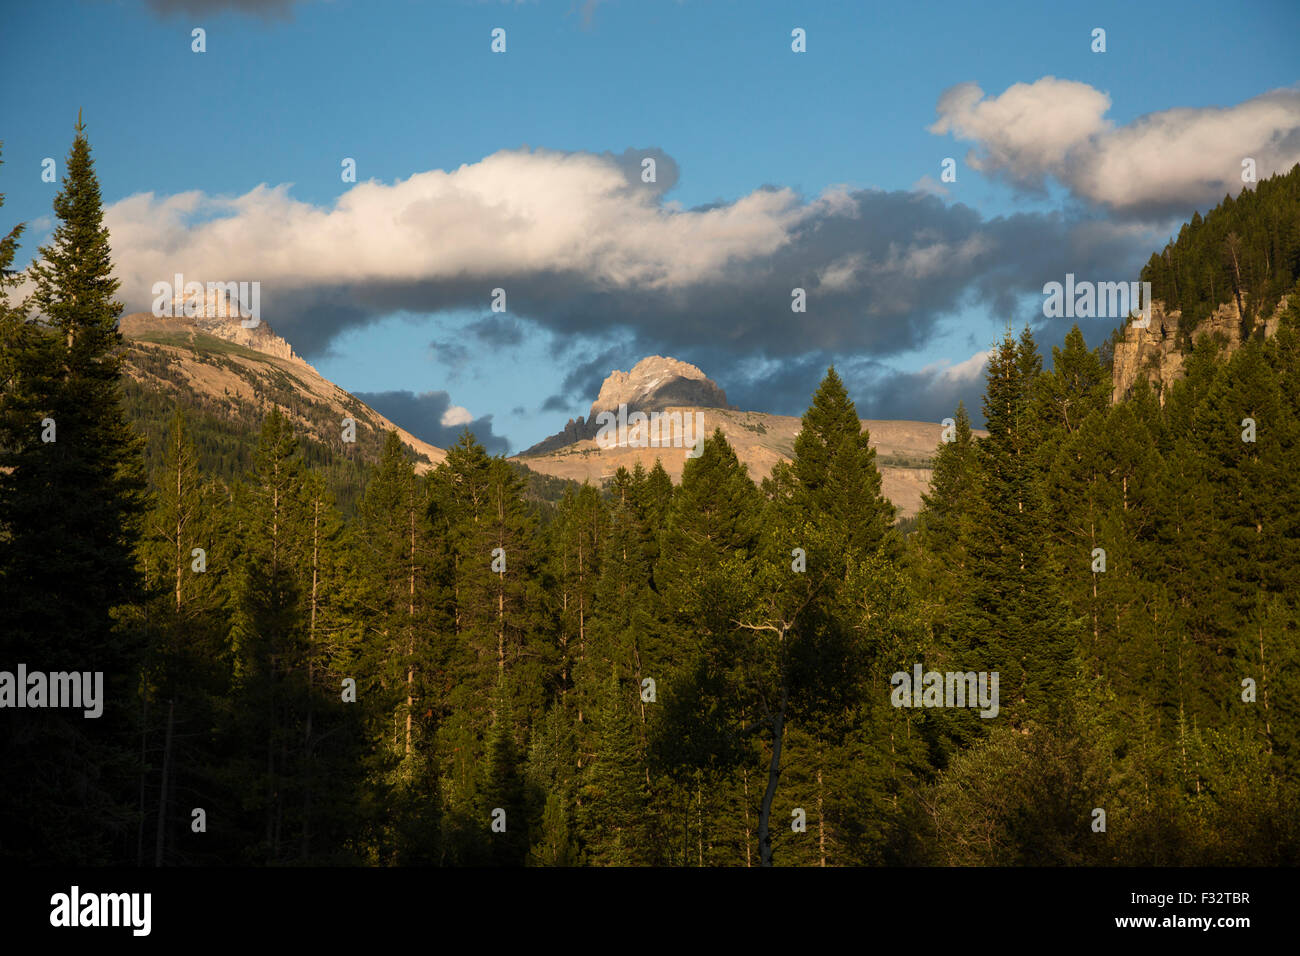 Driggs, Idaho - The Jedediah Smith Wildnis und der Teton-Bergkette. Stockfoto